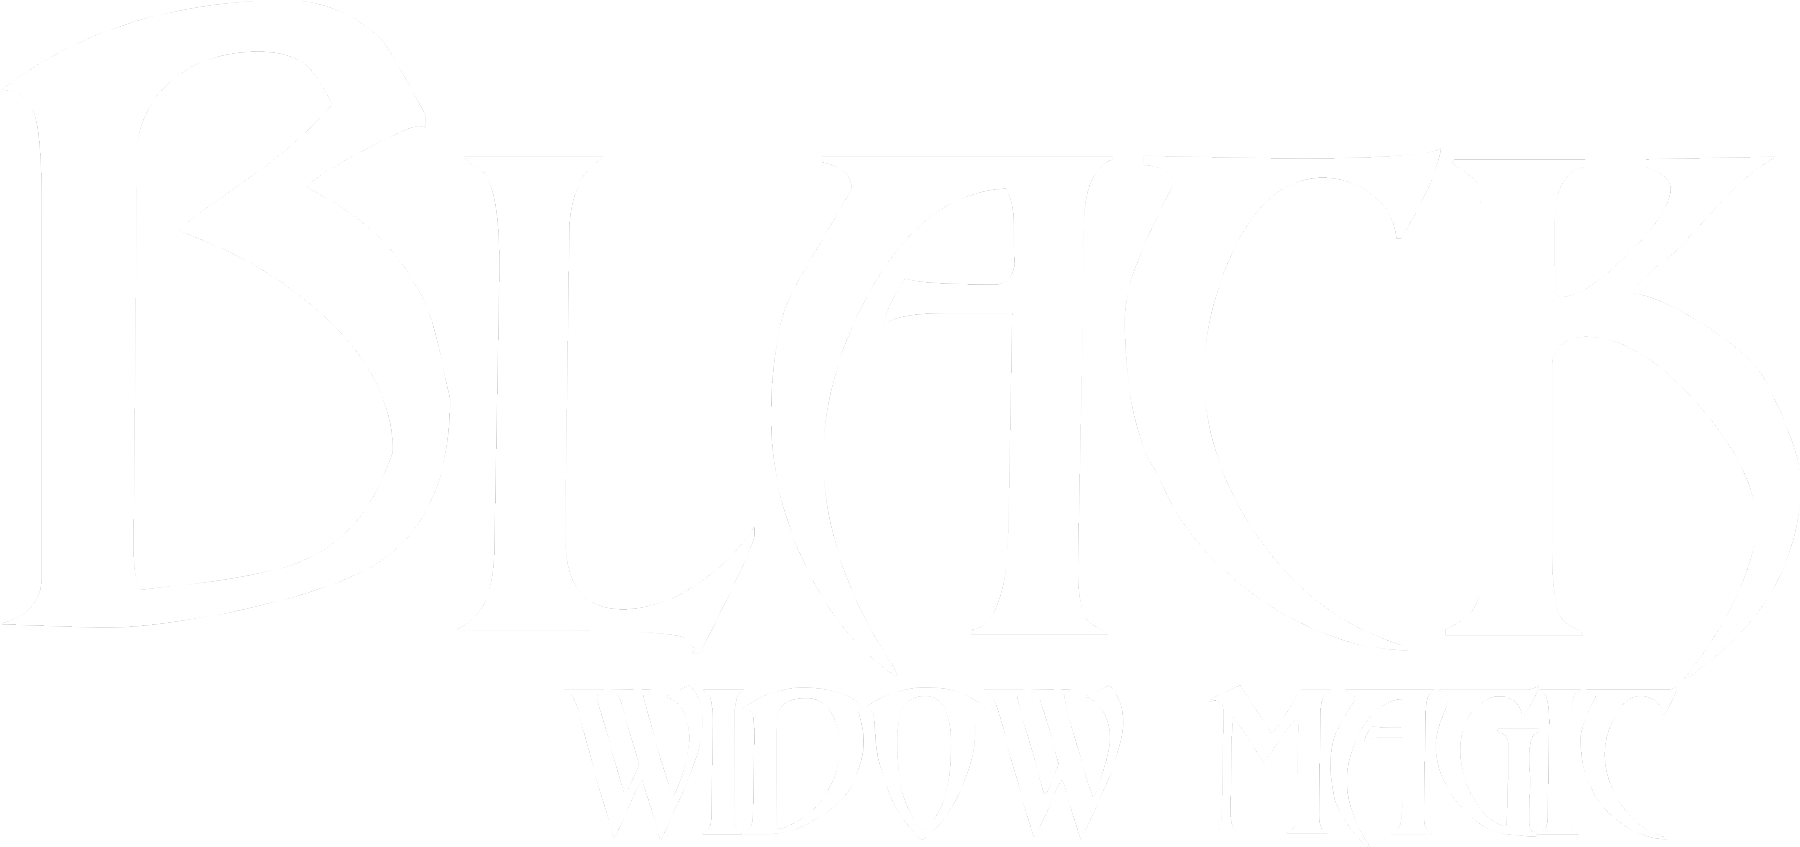 Black Widow Magic title